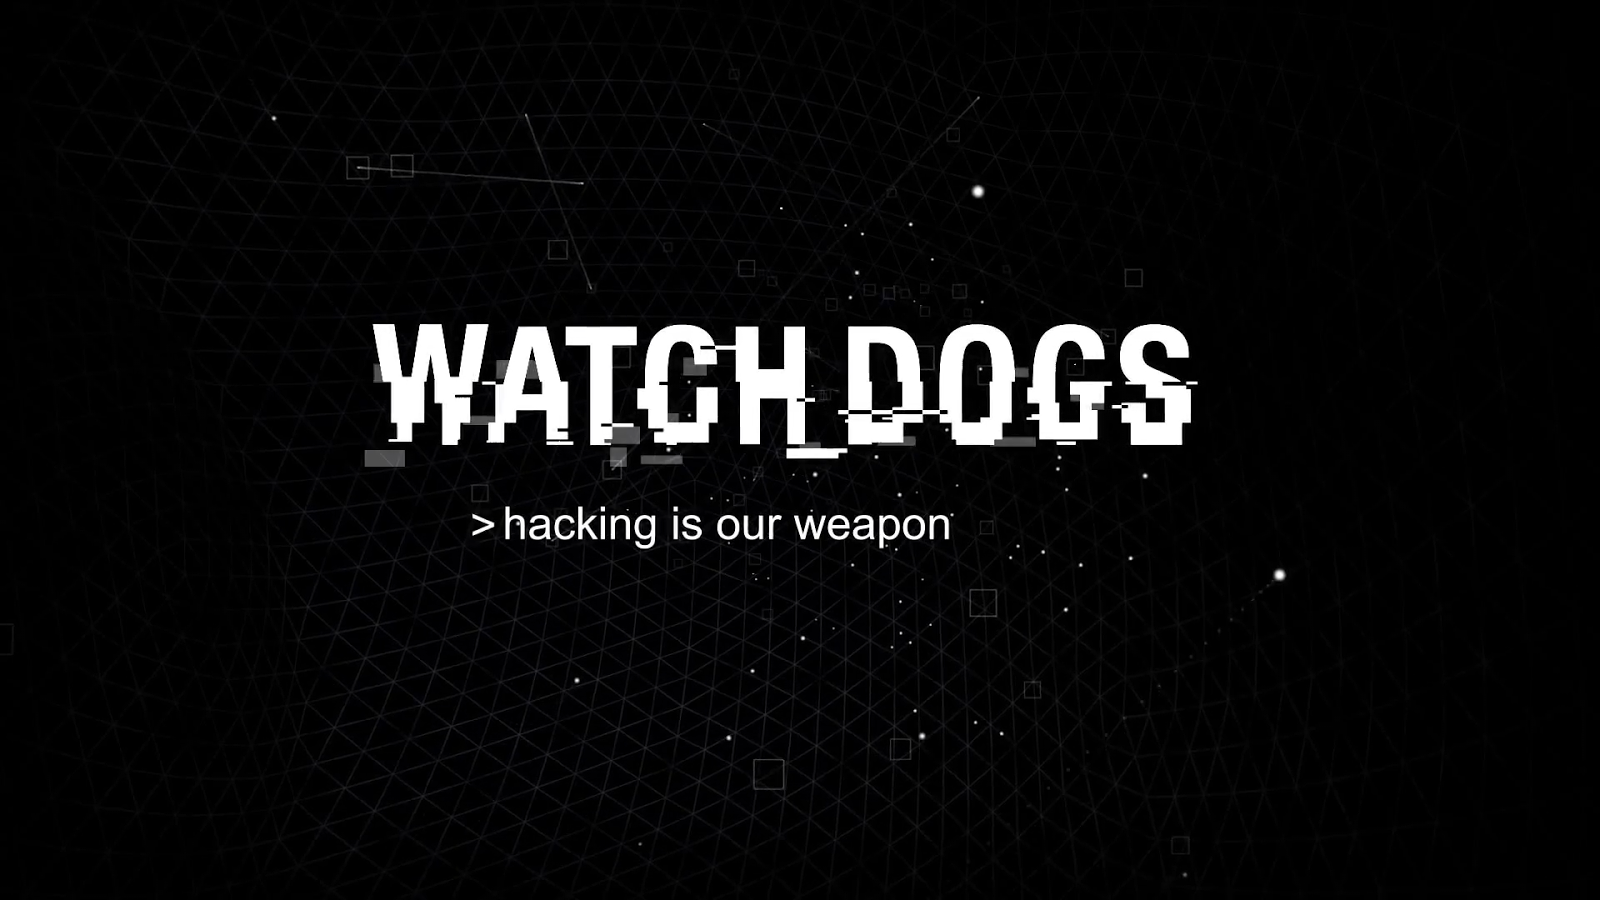 Watch Dogs Wallpaper HD 1080p Image Gallery